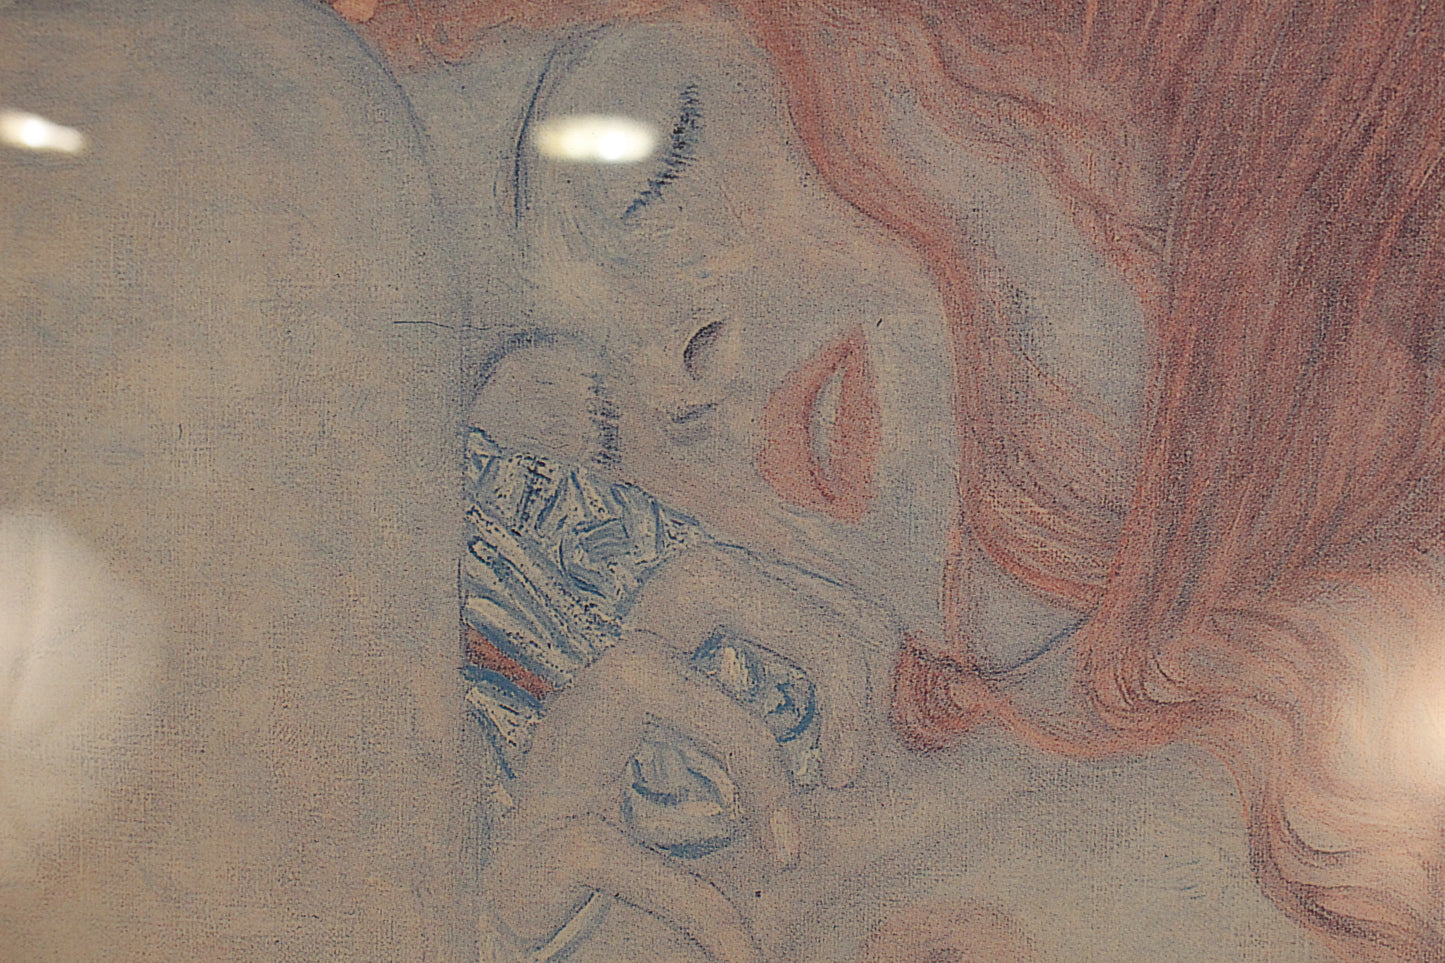 "Danäe" Gustav Klimt Print